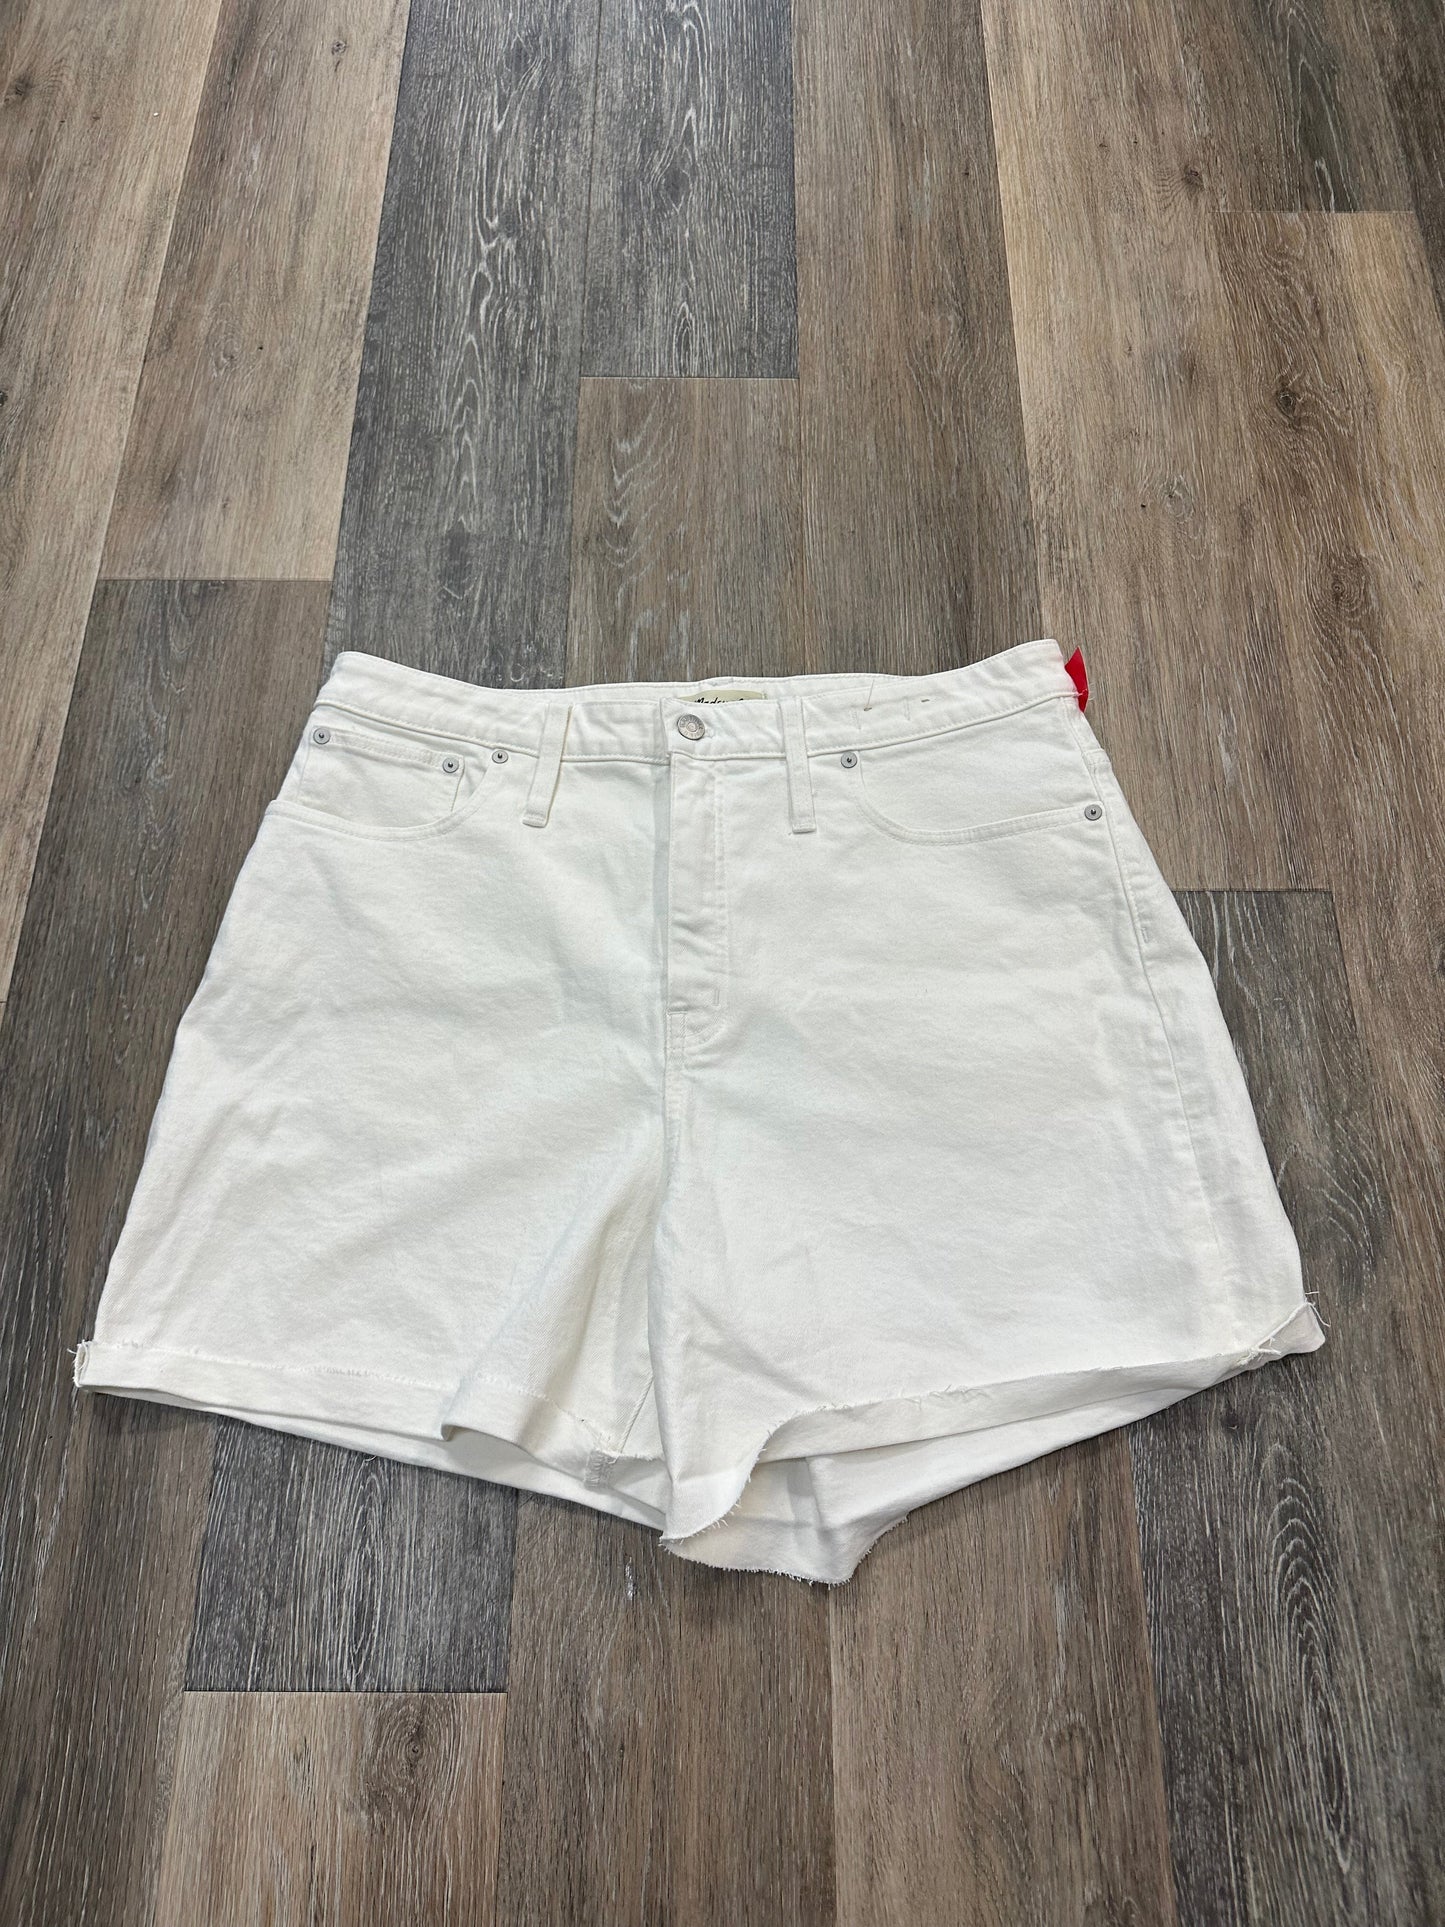 White Shorts Madewell, Size 16